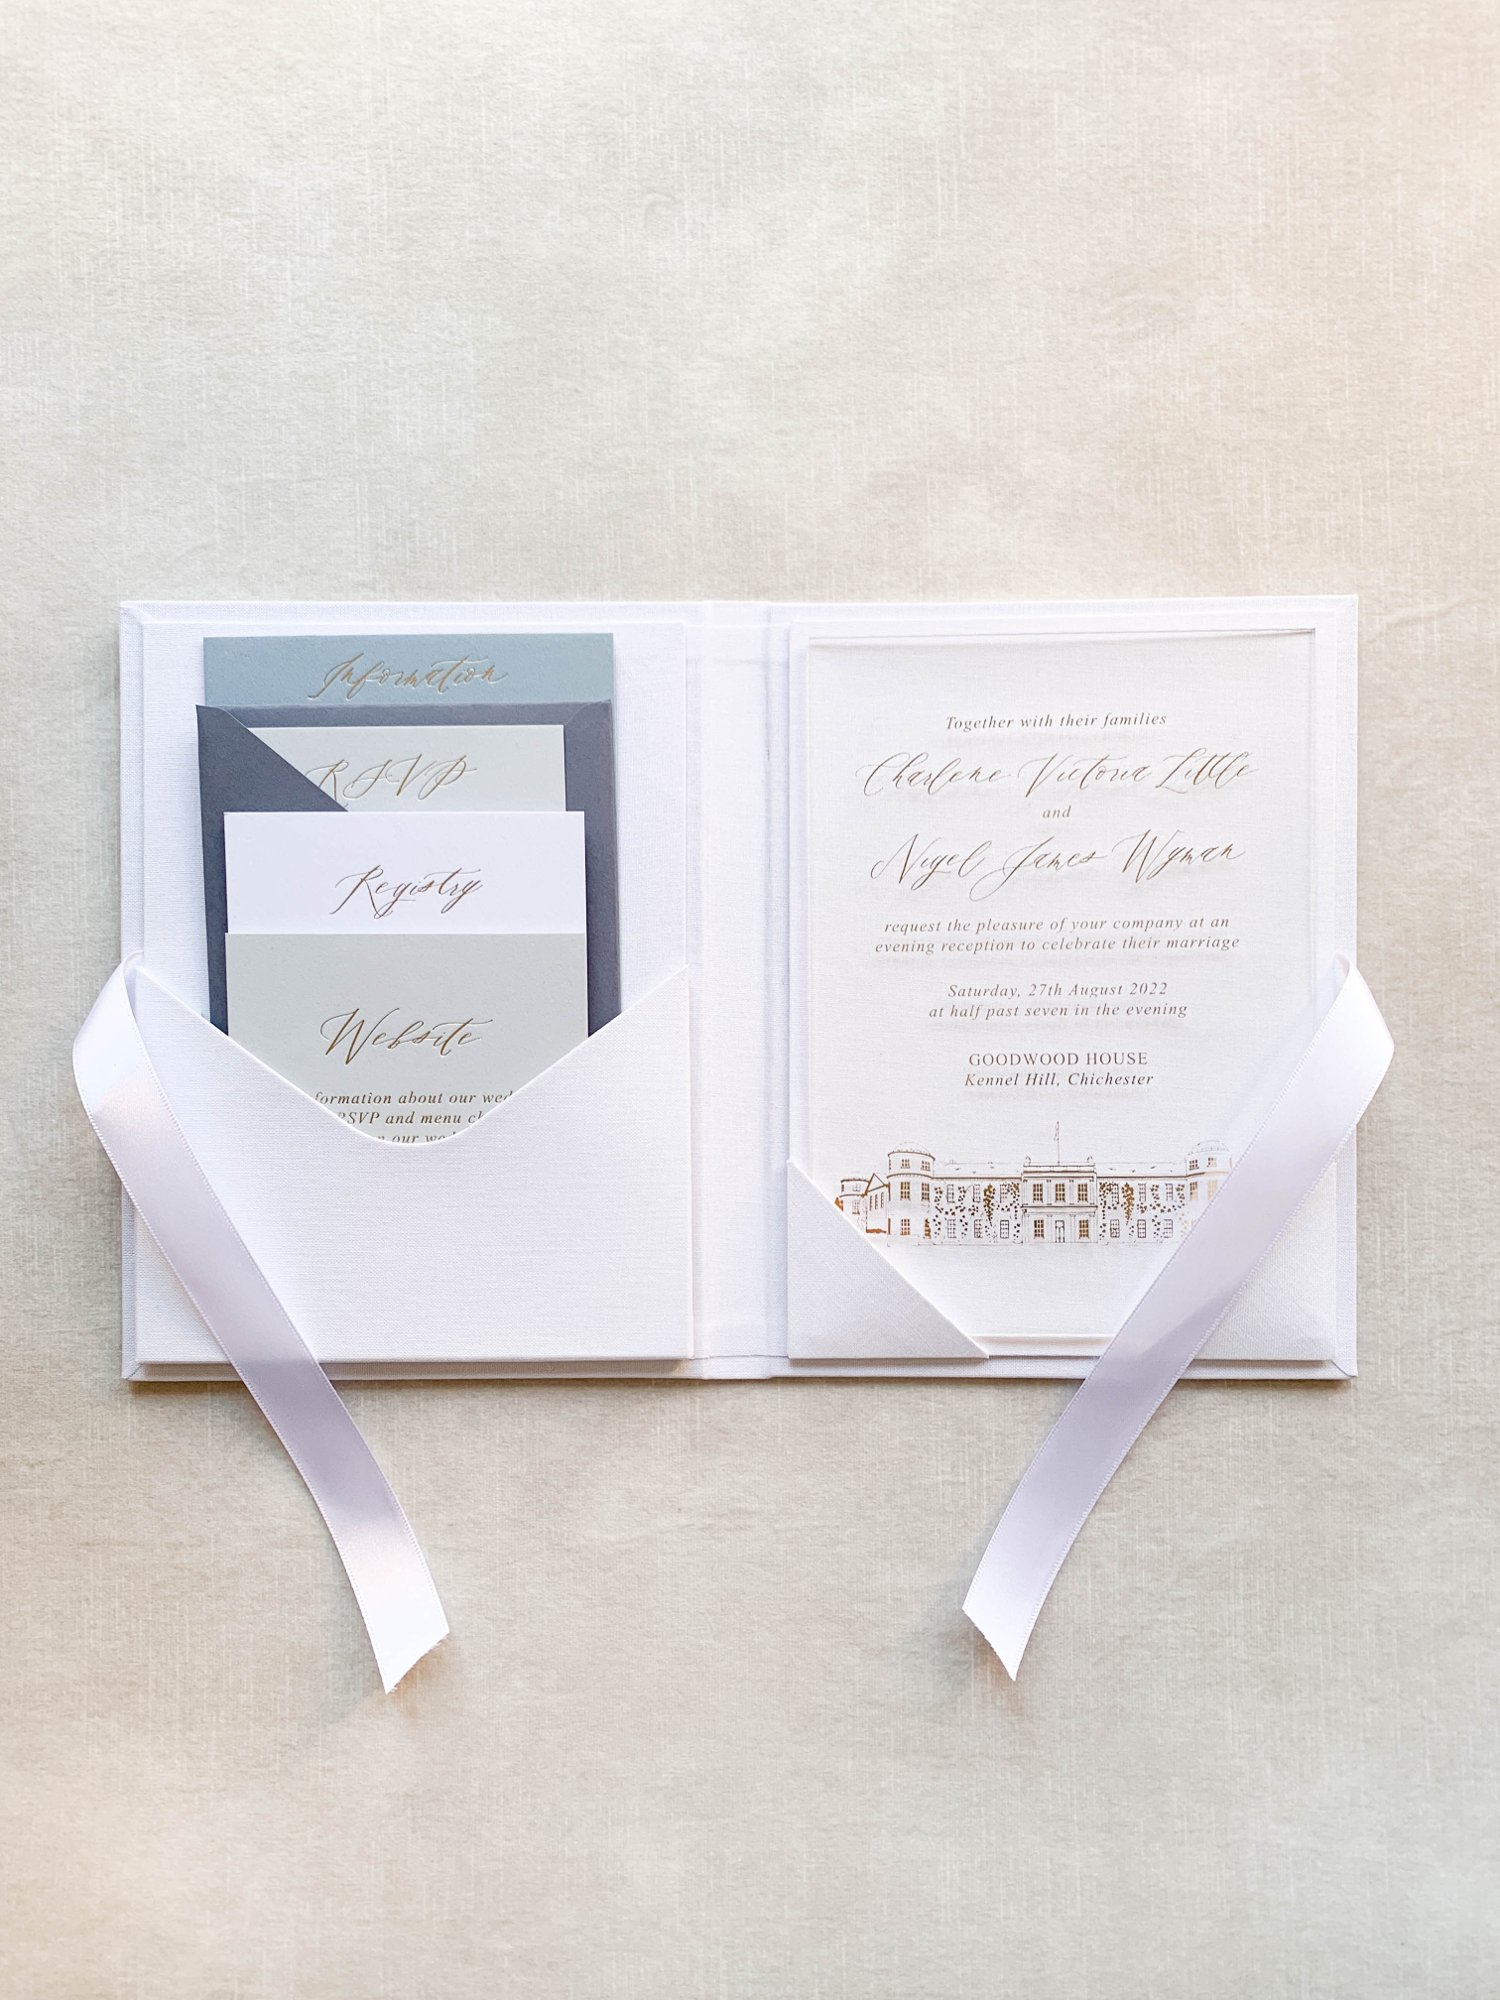 Folio wedding invitations - Lettering by GRG (4).jpg